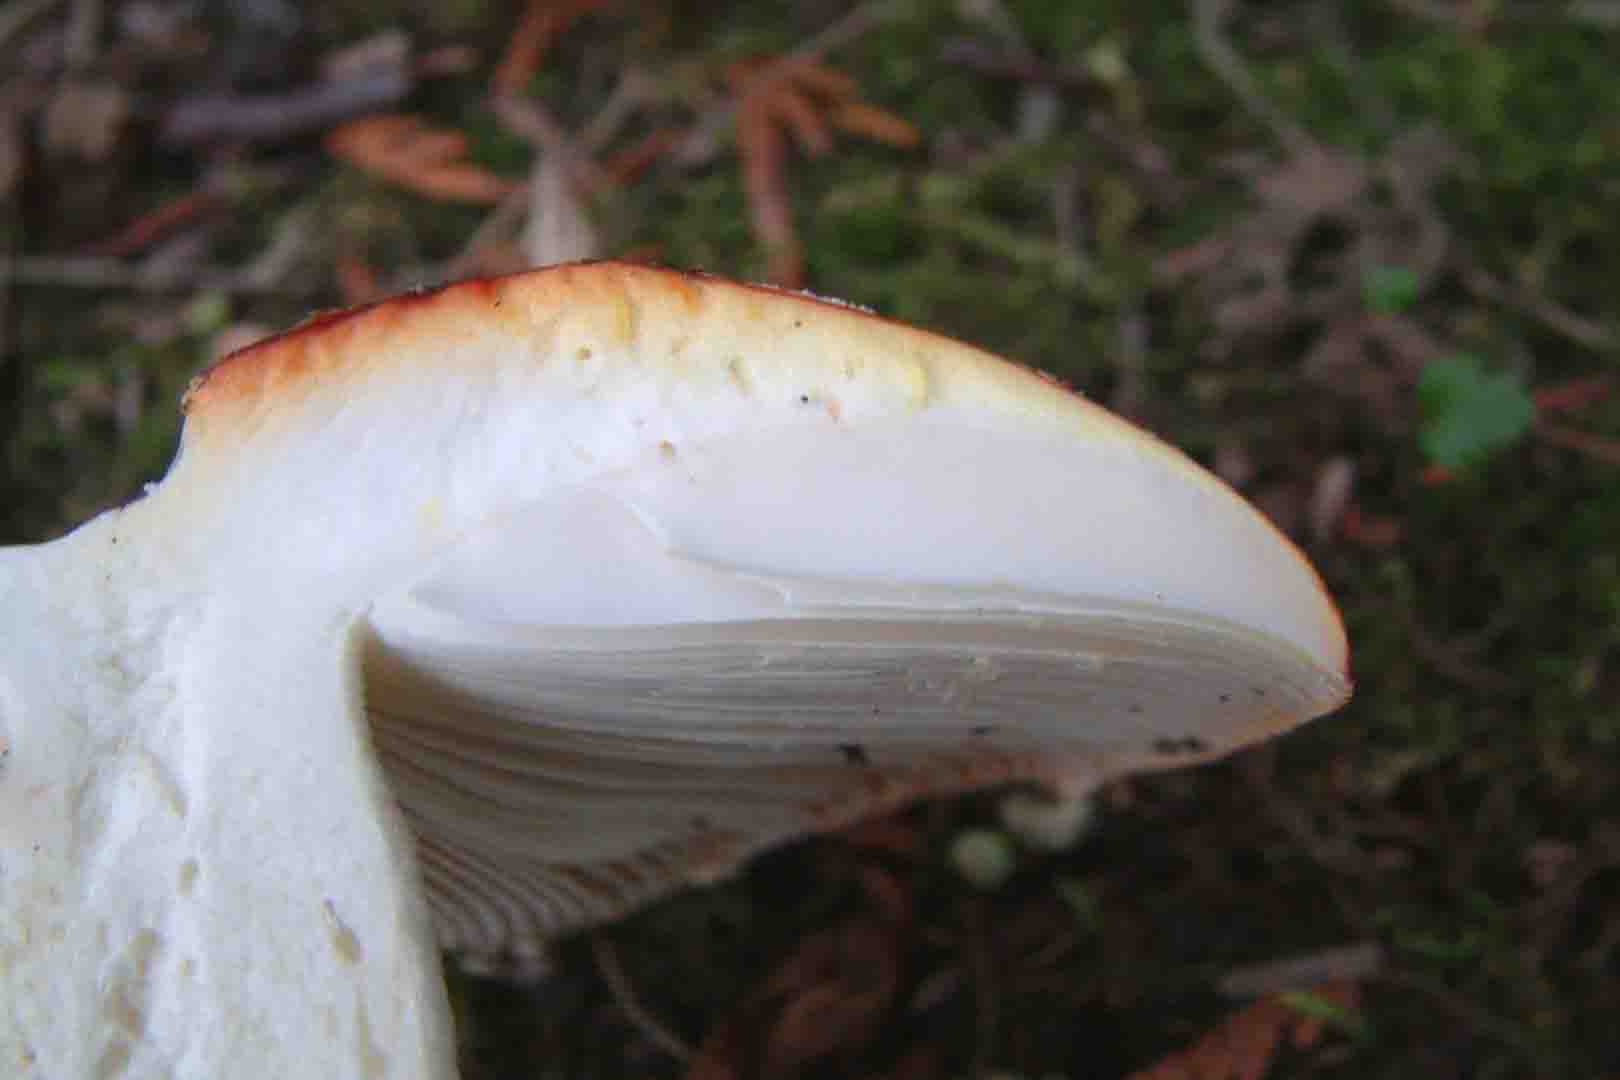 Lawnmower's mushroom